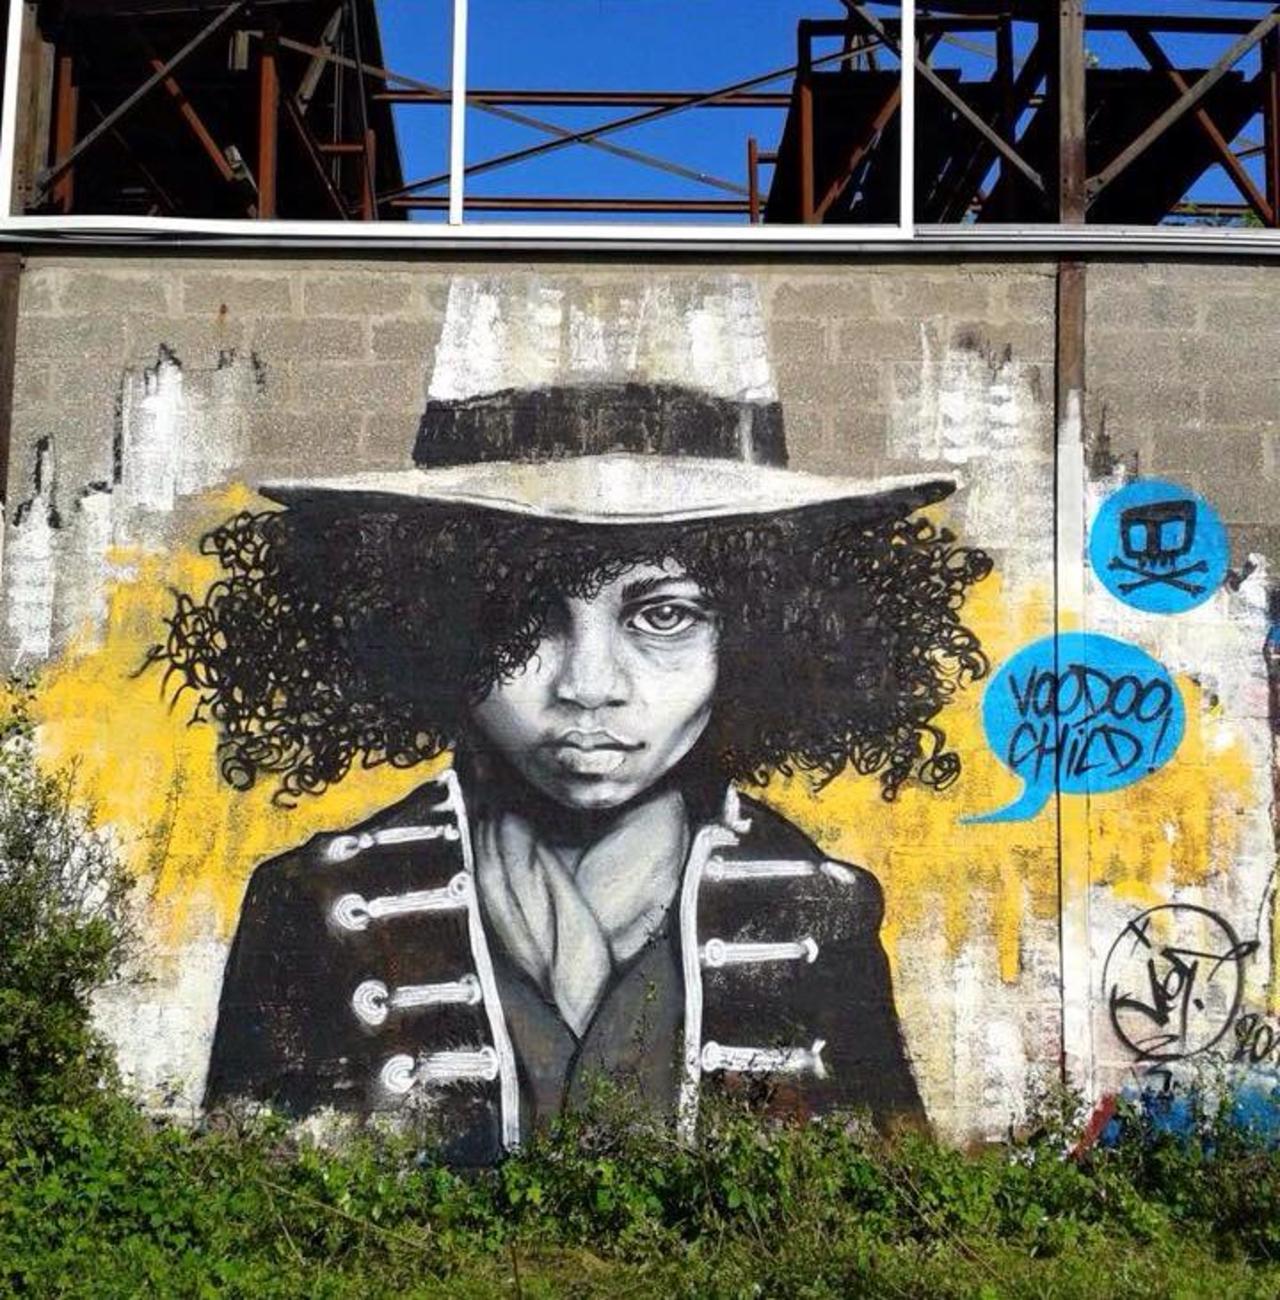 RT grant_factory: Street Art portrait by Jef 

#art #arte #graffiti #streetart http://t.co/9dHCjQOfk3